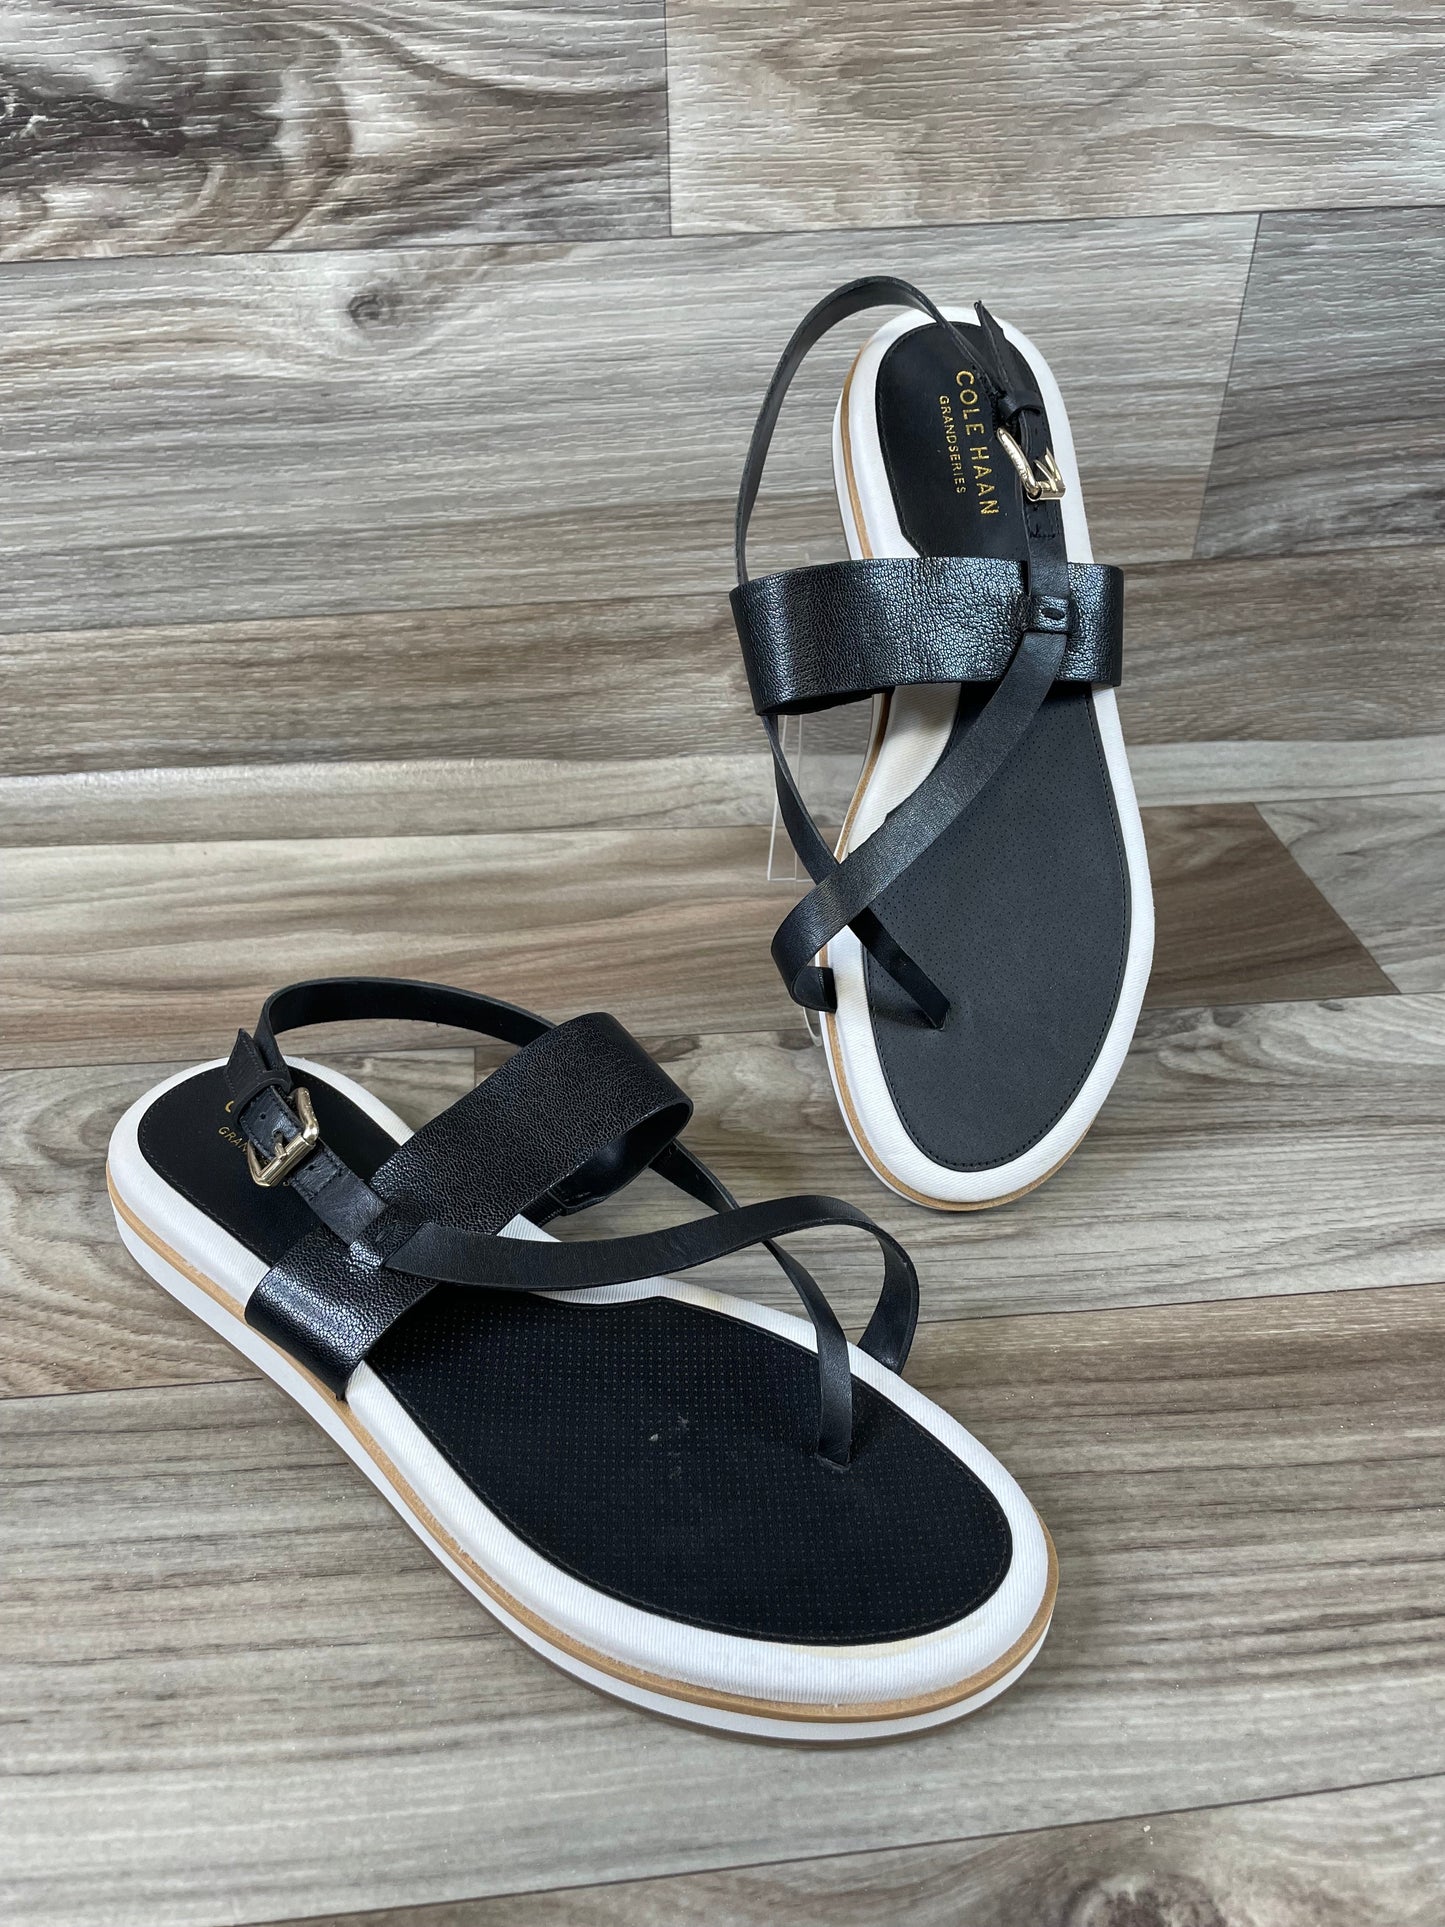 Black & White Sandals Designer Cole-haan, Size 9.5